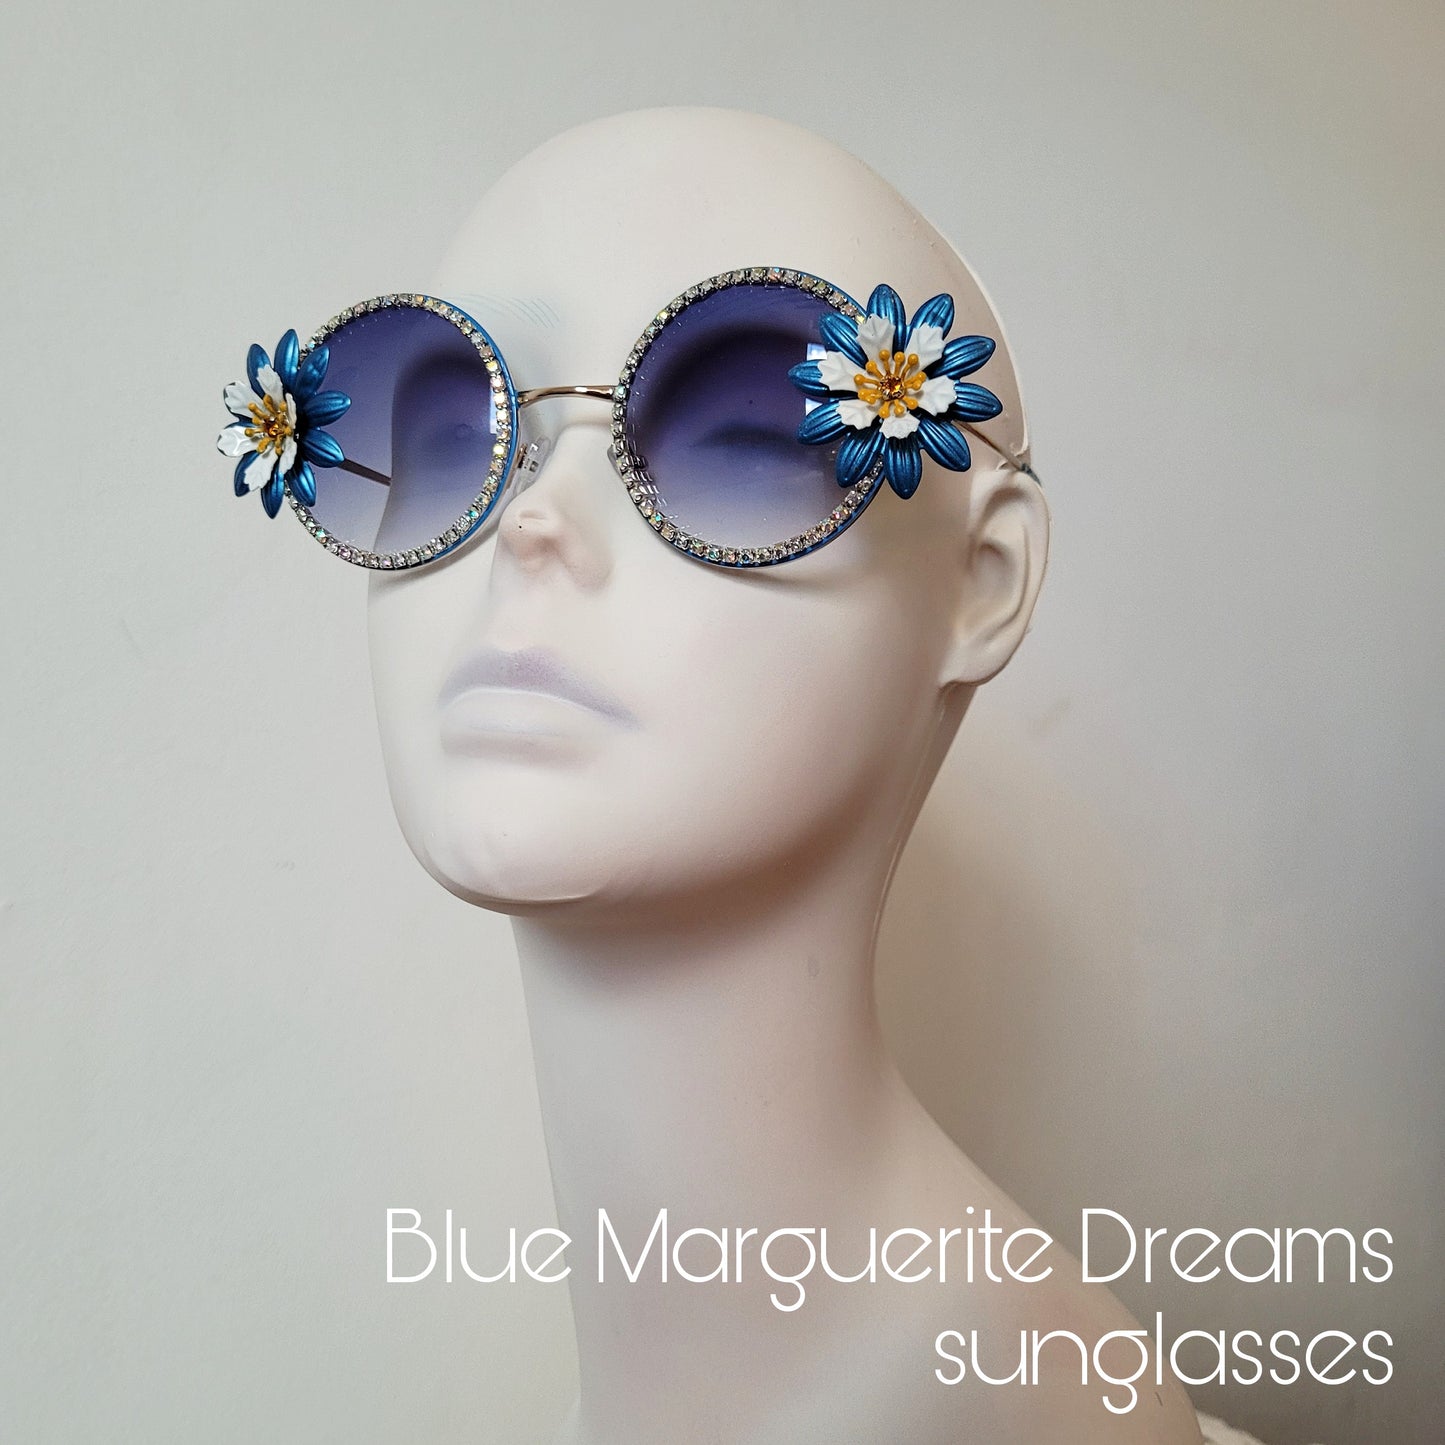 Bumblebee Dreams collection: the Blue Marguerite Dreams Sunglasses (Göteborg 400 år edition)